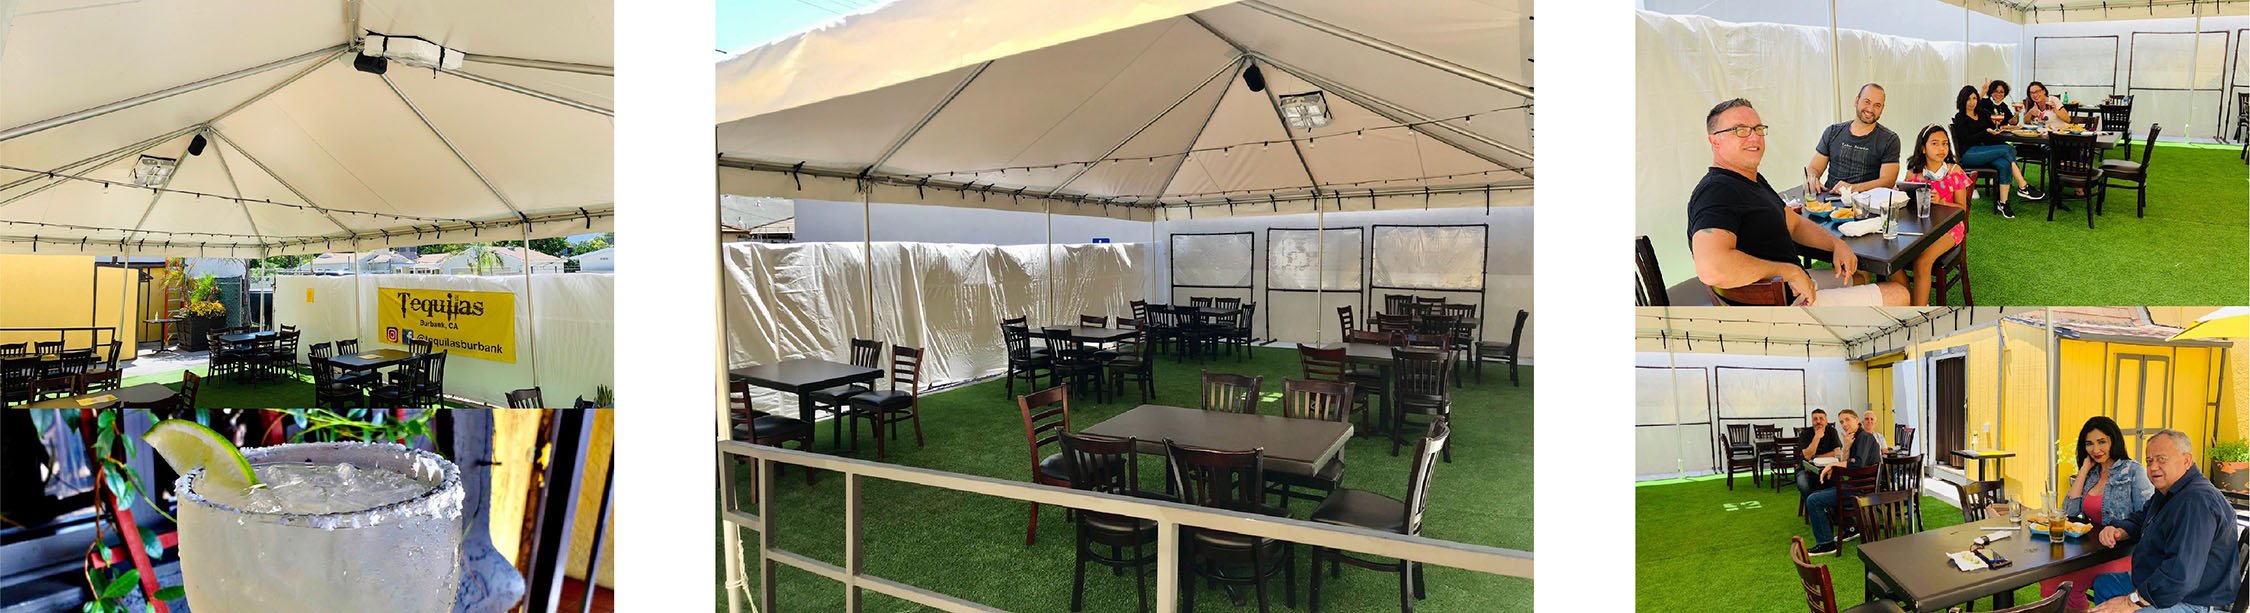 restaurant-tents